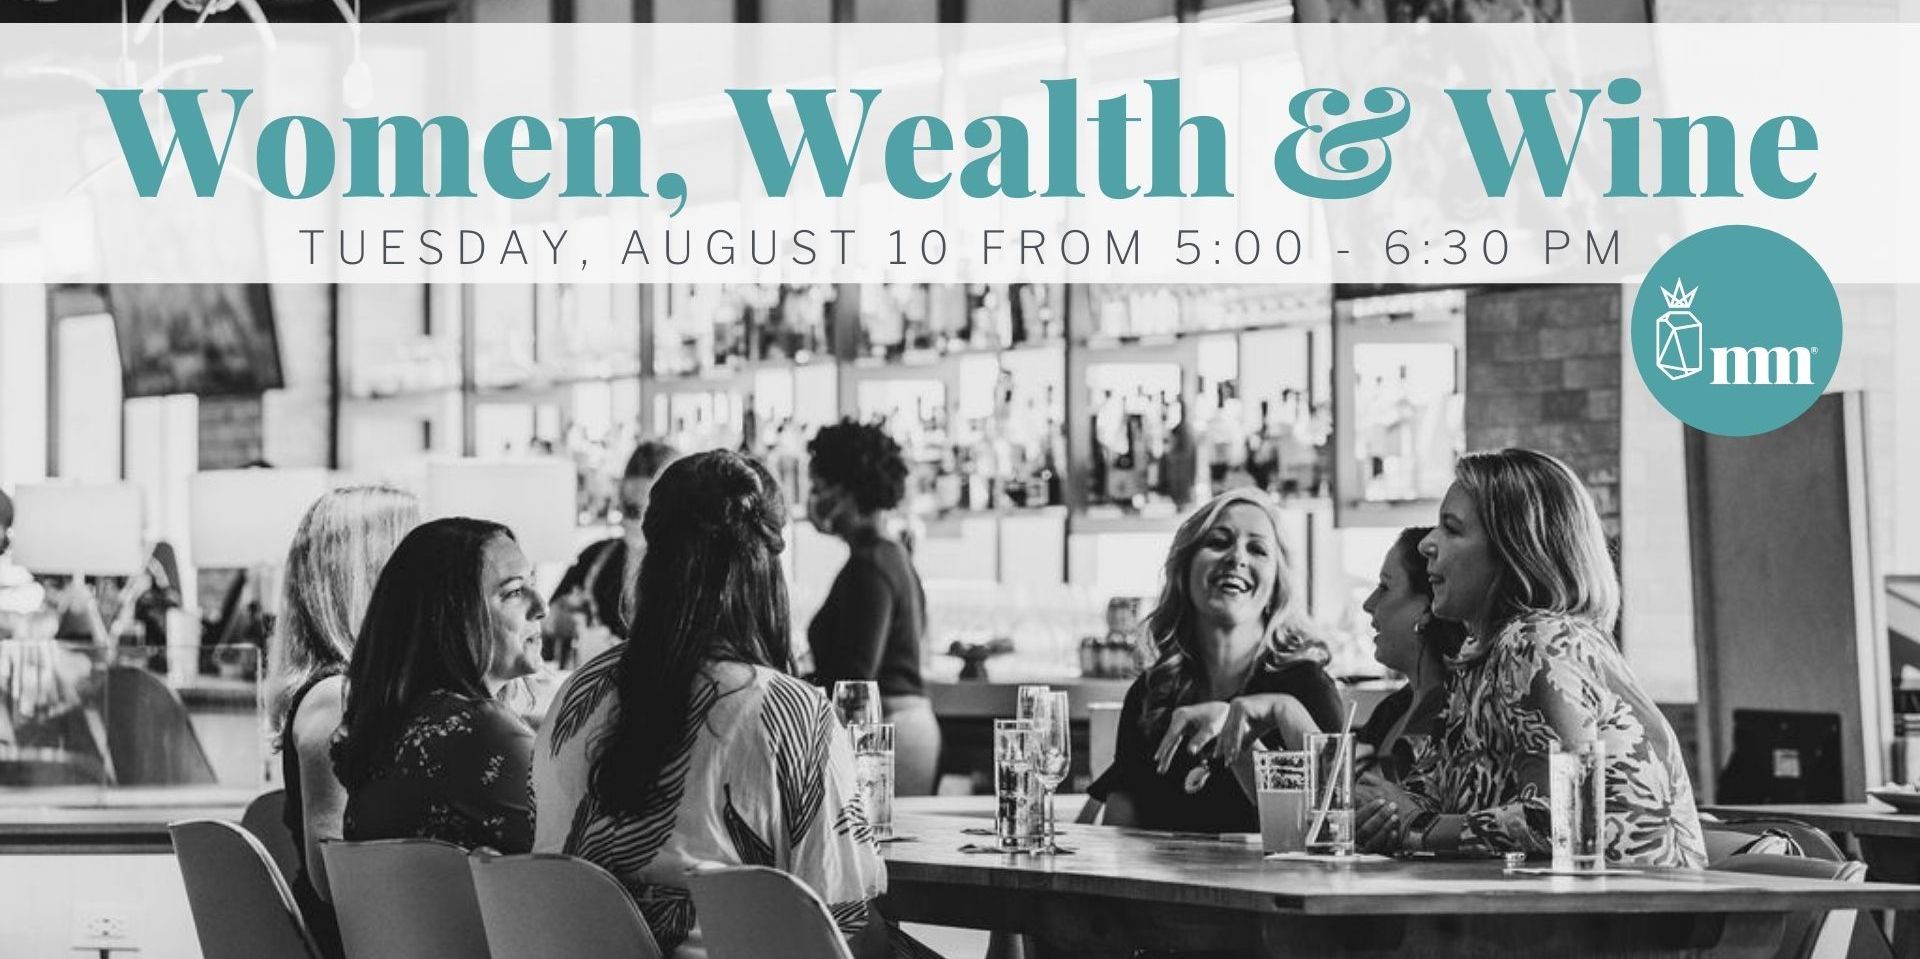 Women, Wealth & Wine promotional image